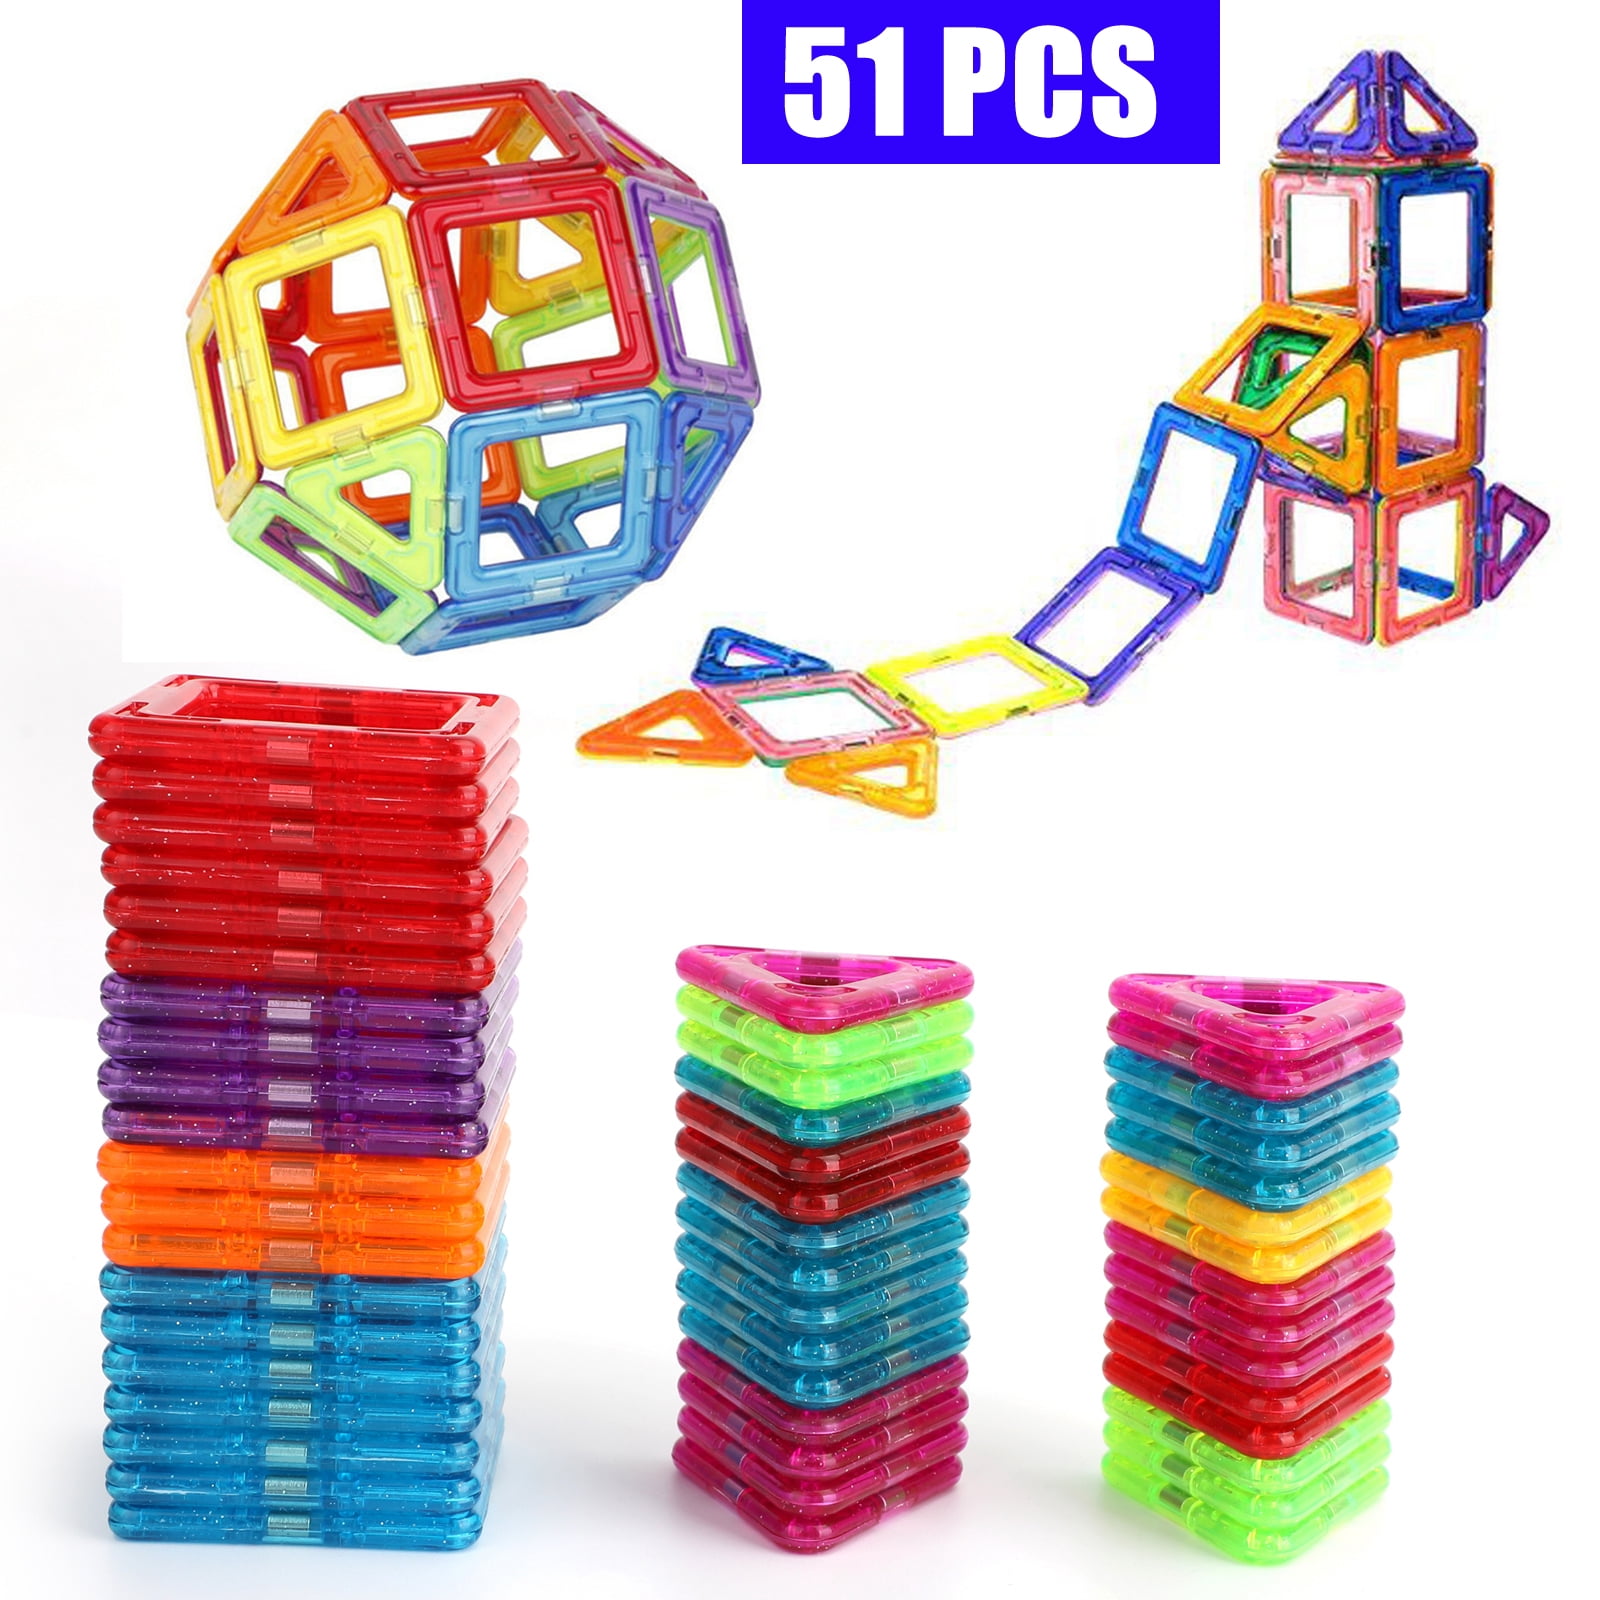 Tomons 108 PCS Magnetic Building Blocks Magnetic Tiles for Kids Magnetic Blo... 